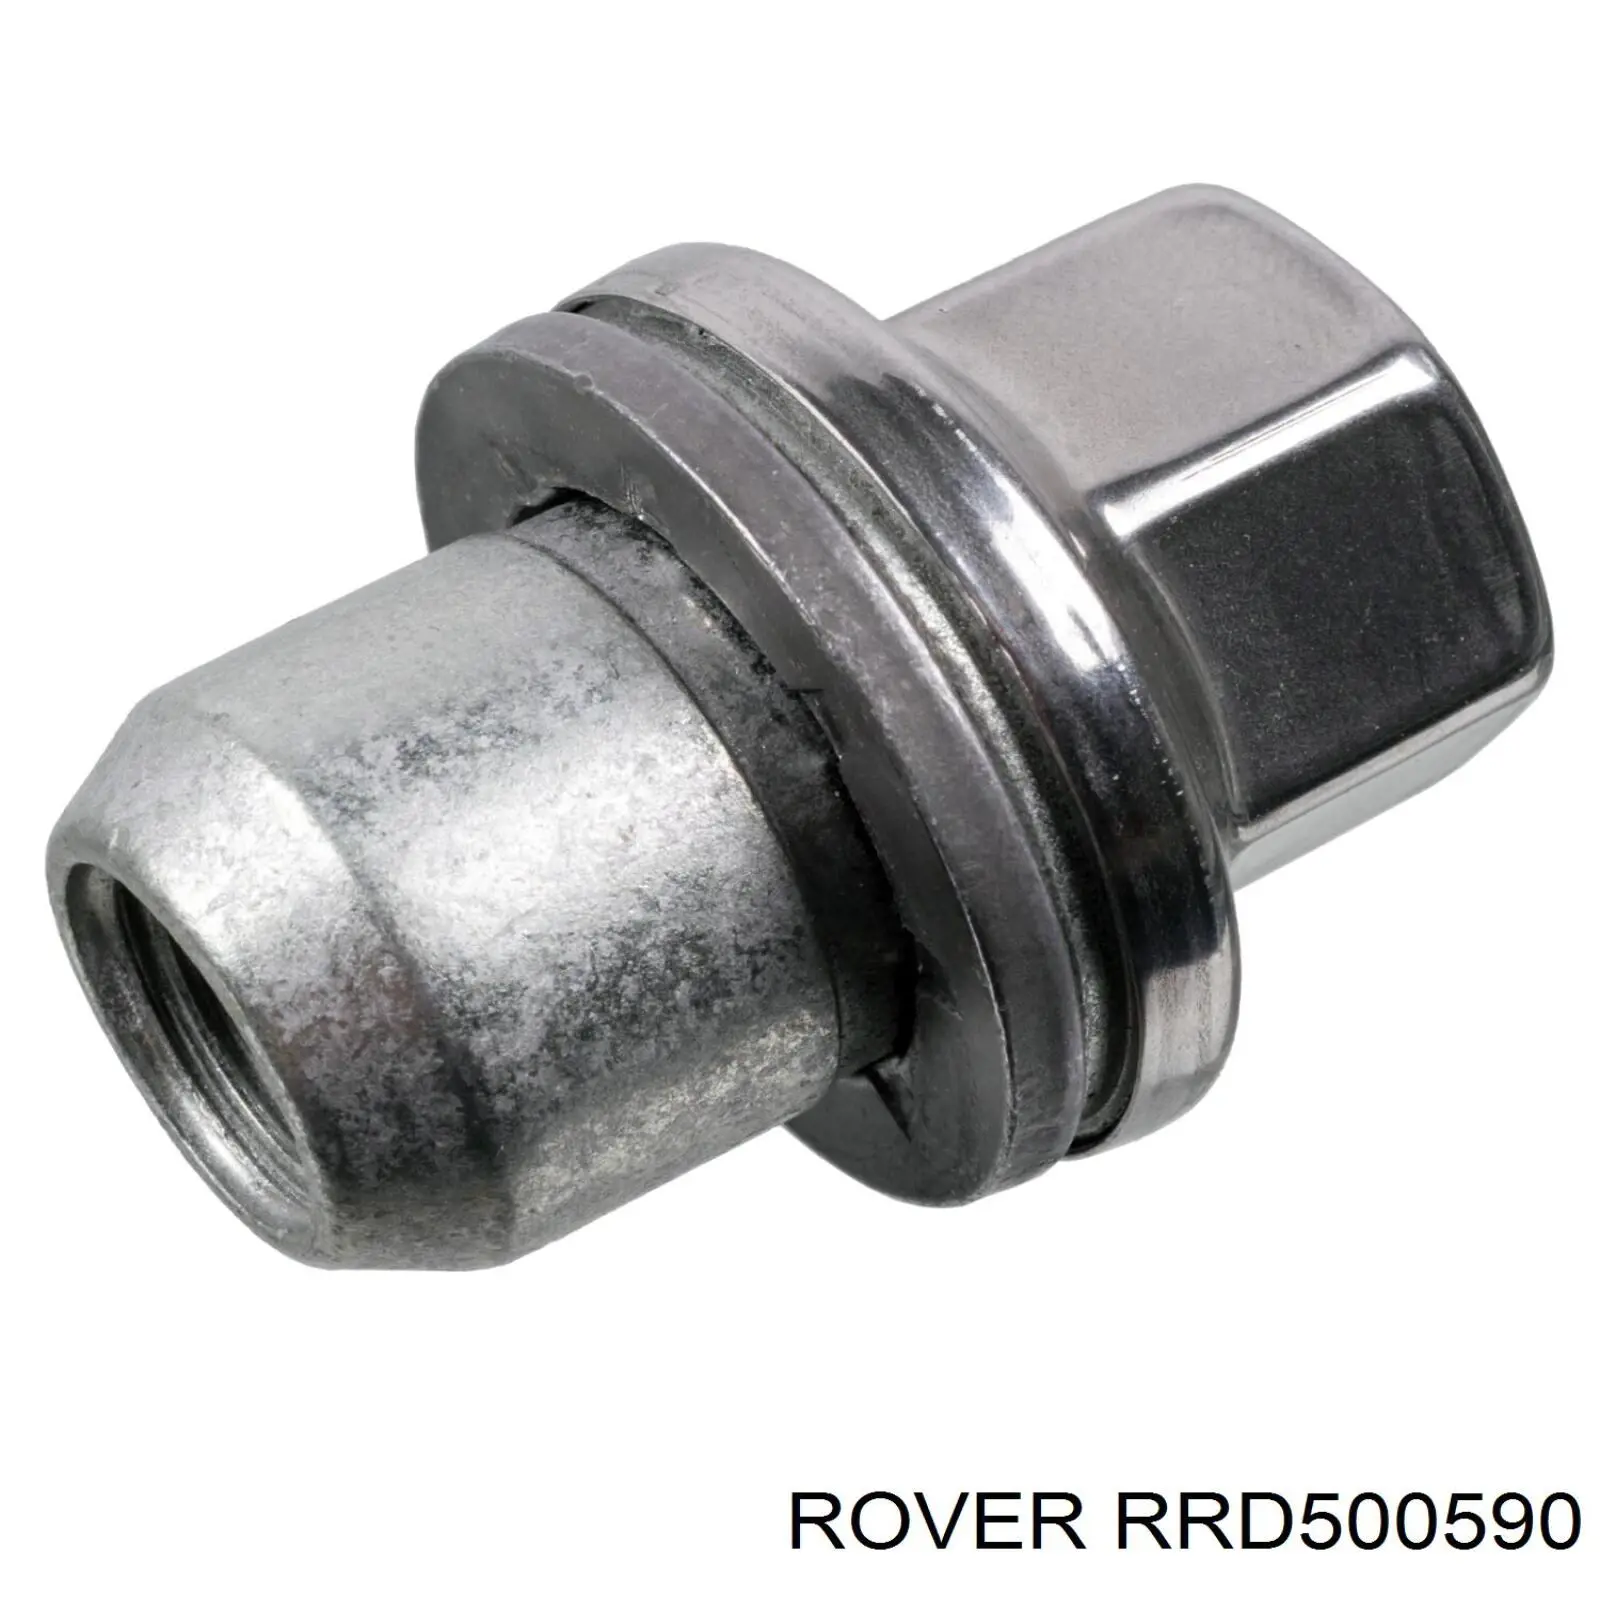 RRD500590 Rover гайка колесная